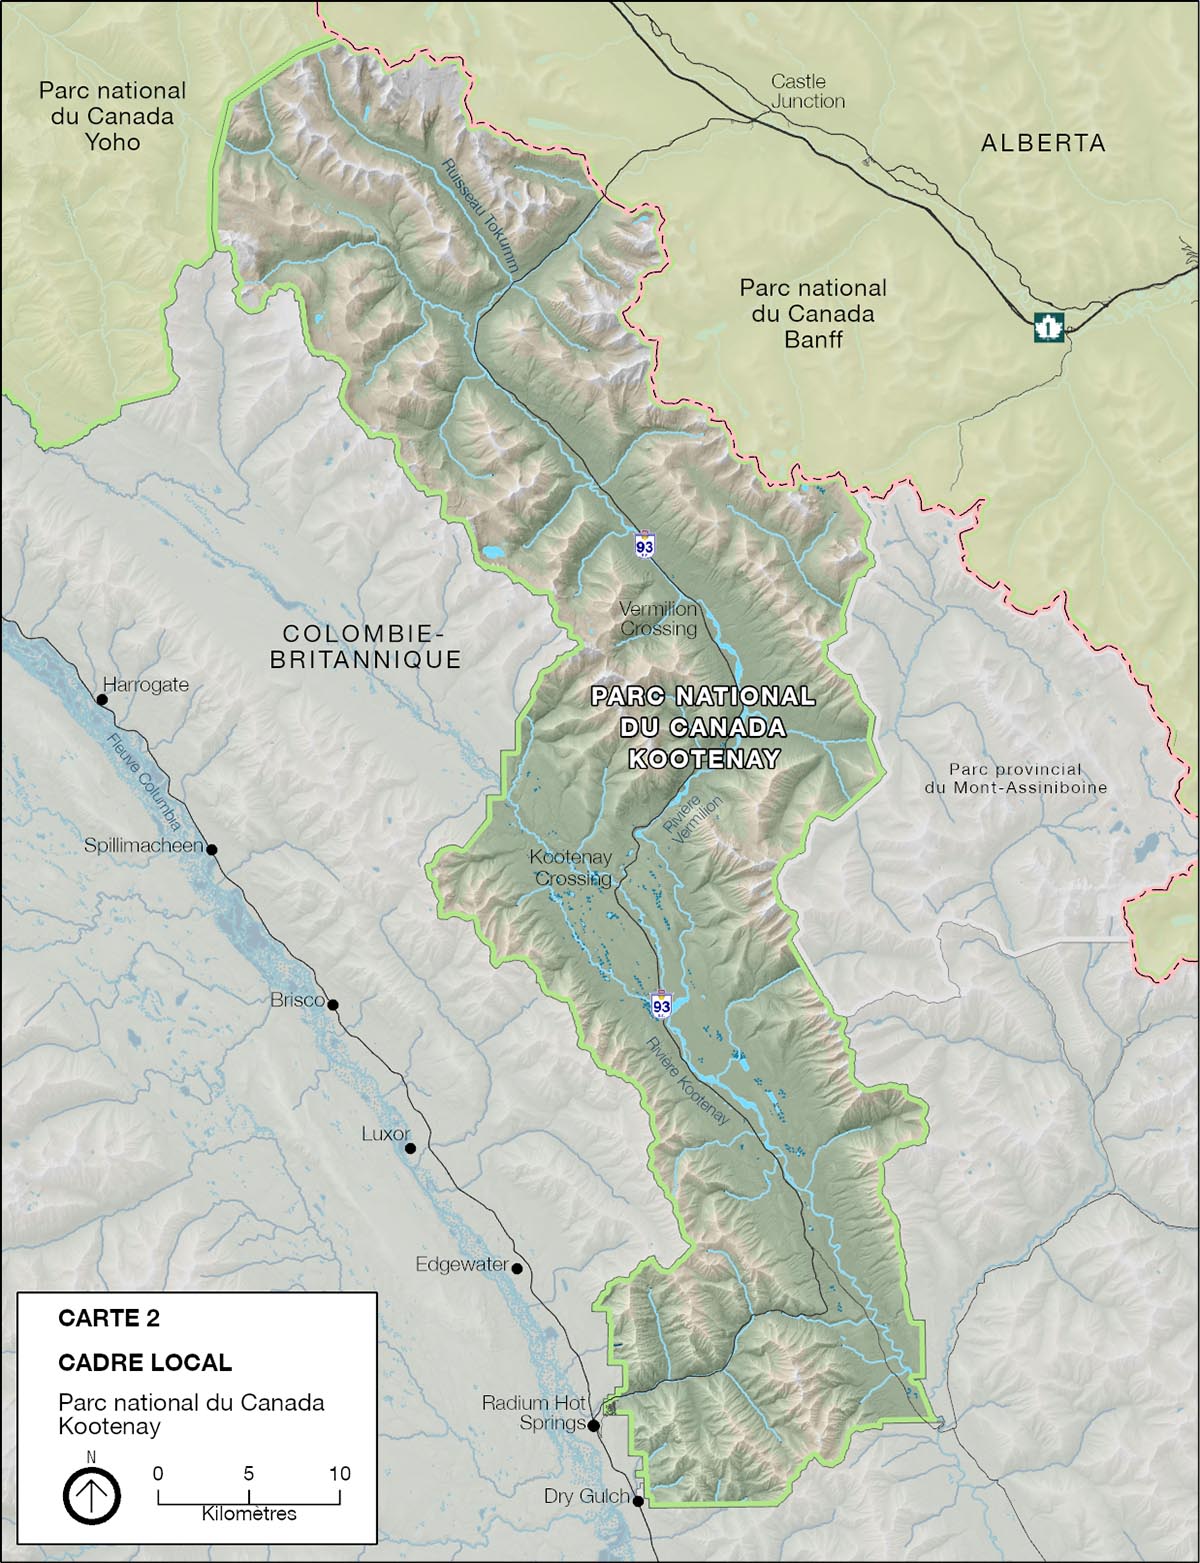 Carte 2 : Cadre local – Parc national Kootenay